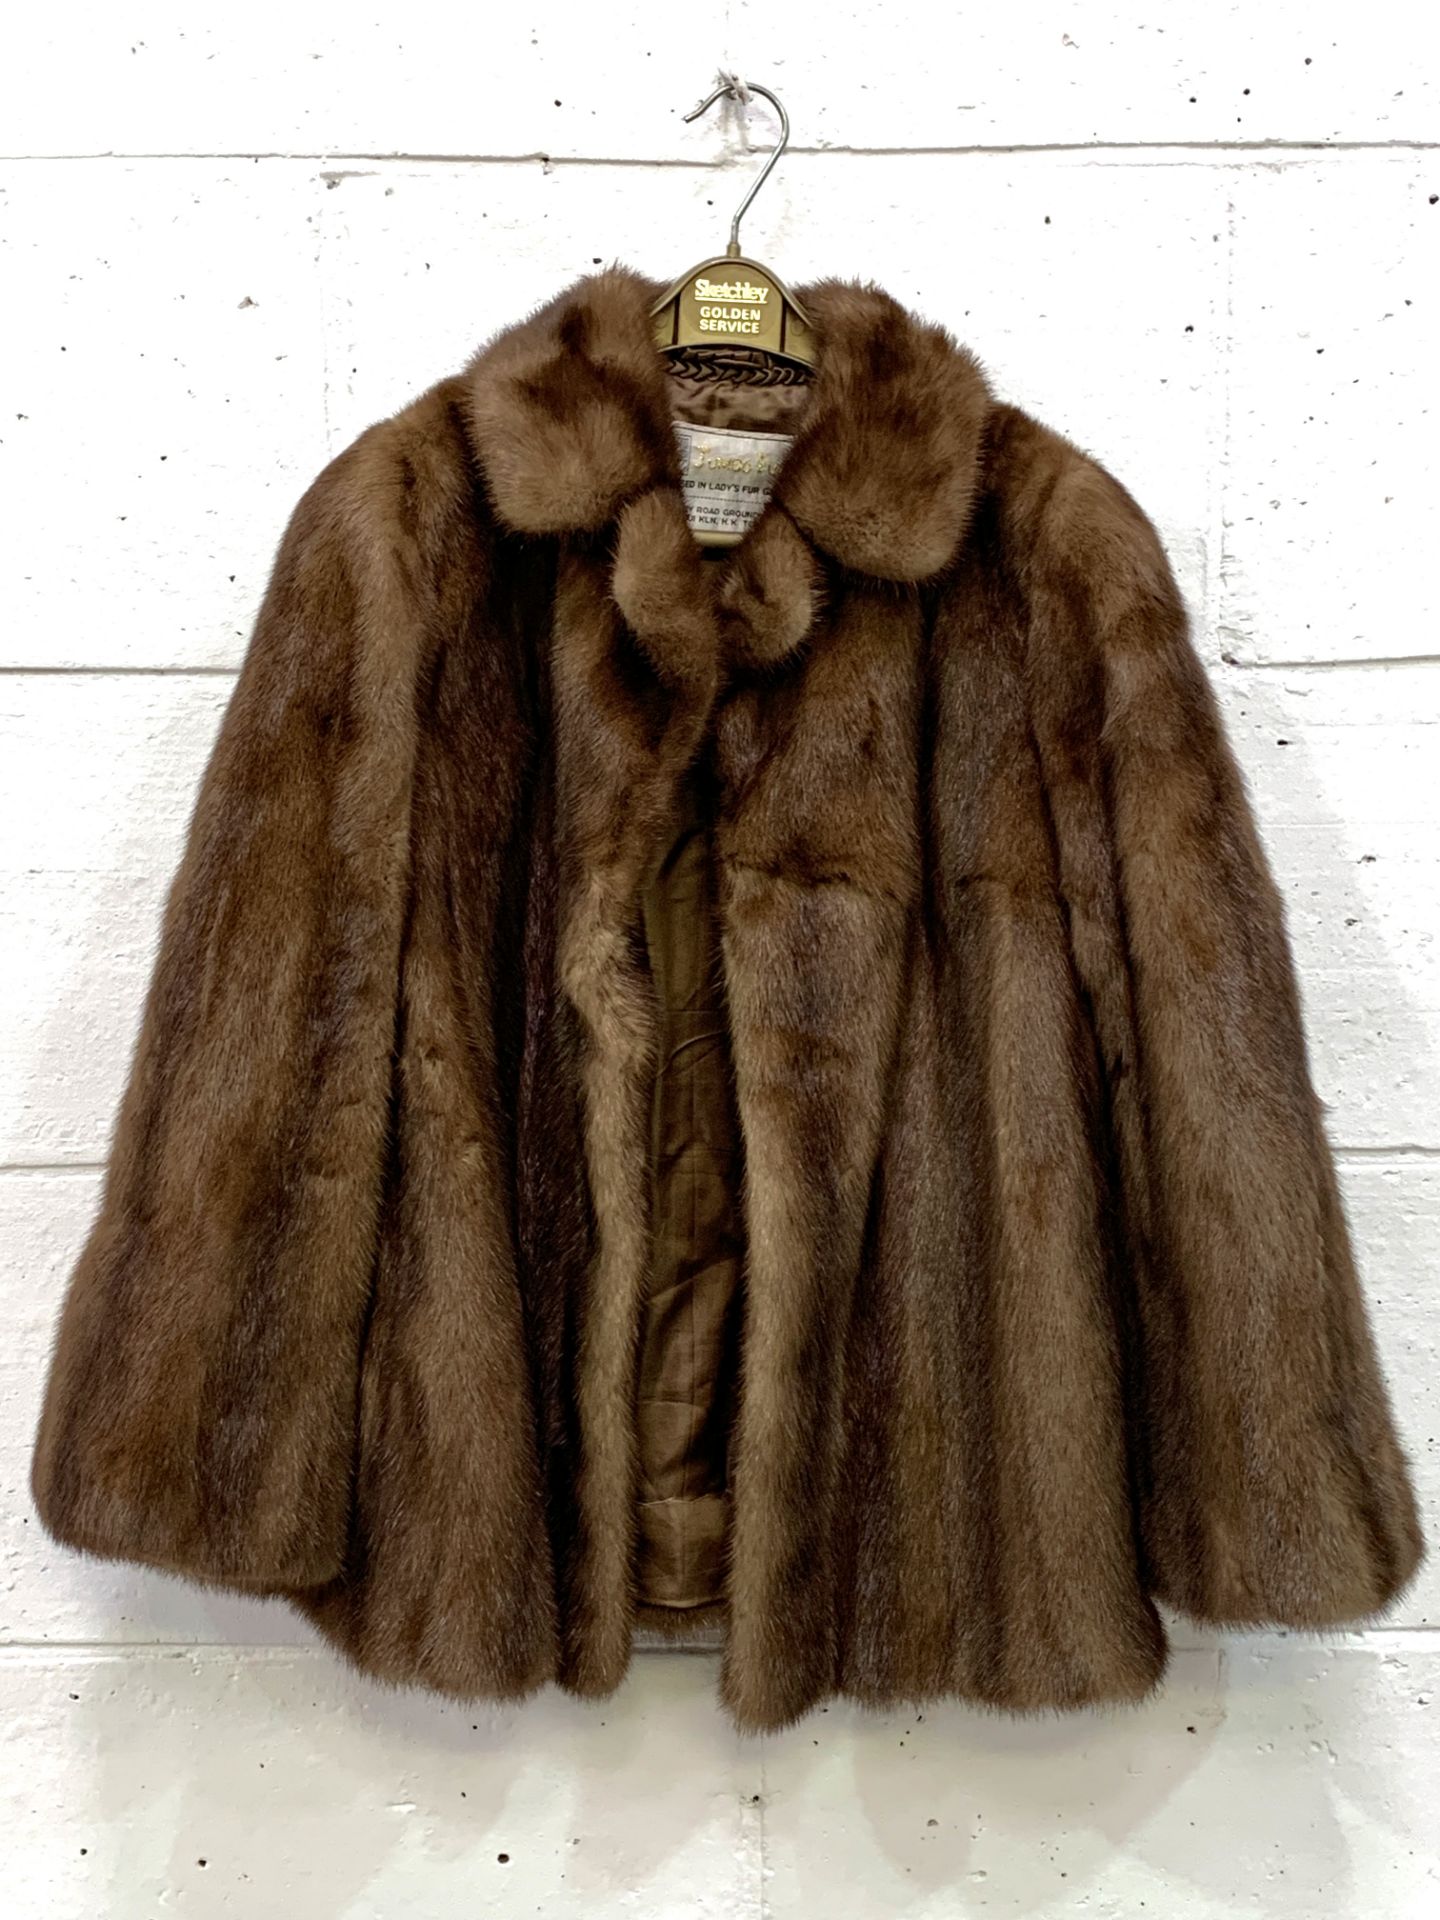 Lady's fur jacket by the Jumbo Fur Company of Hong Kong - Image 2 of 3